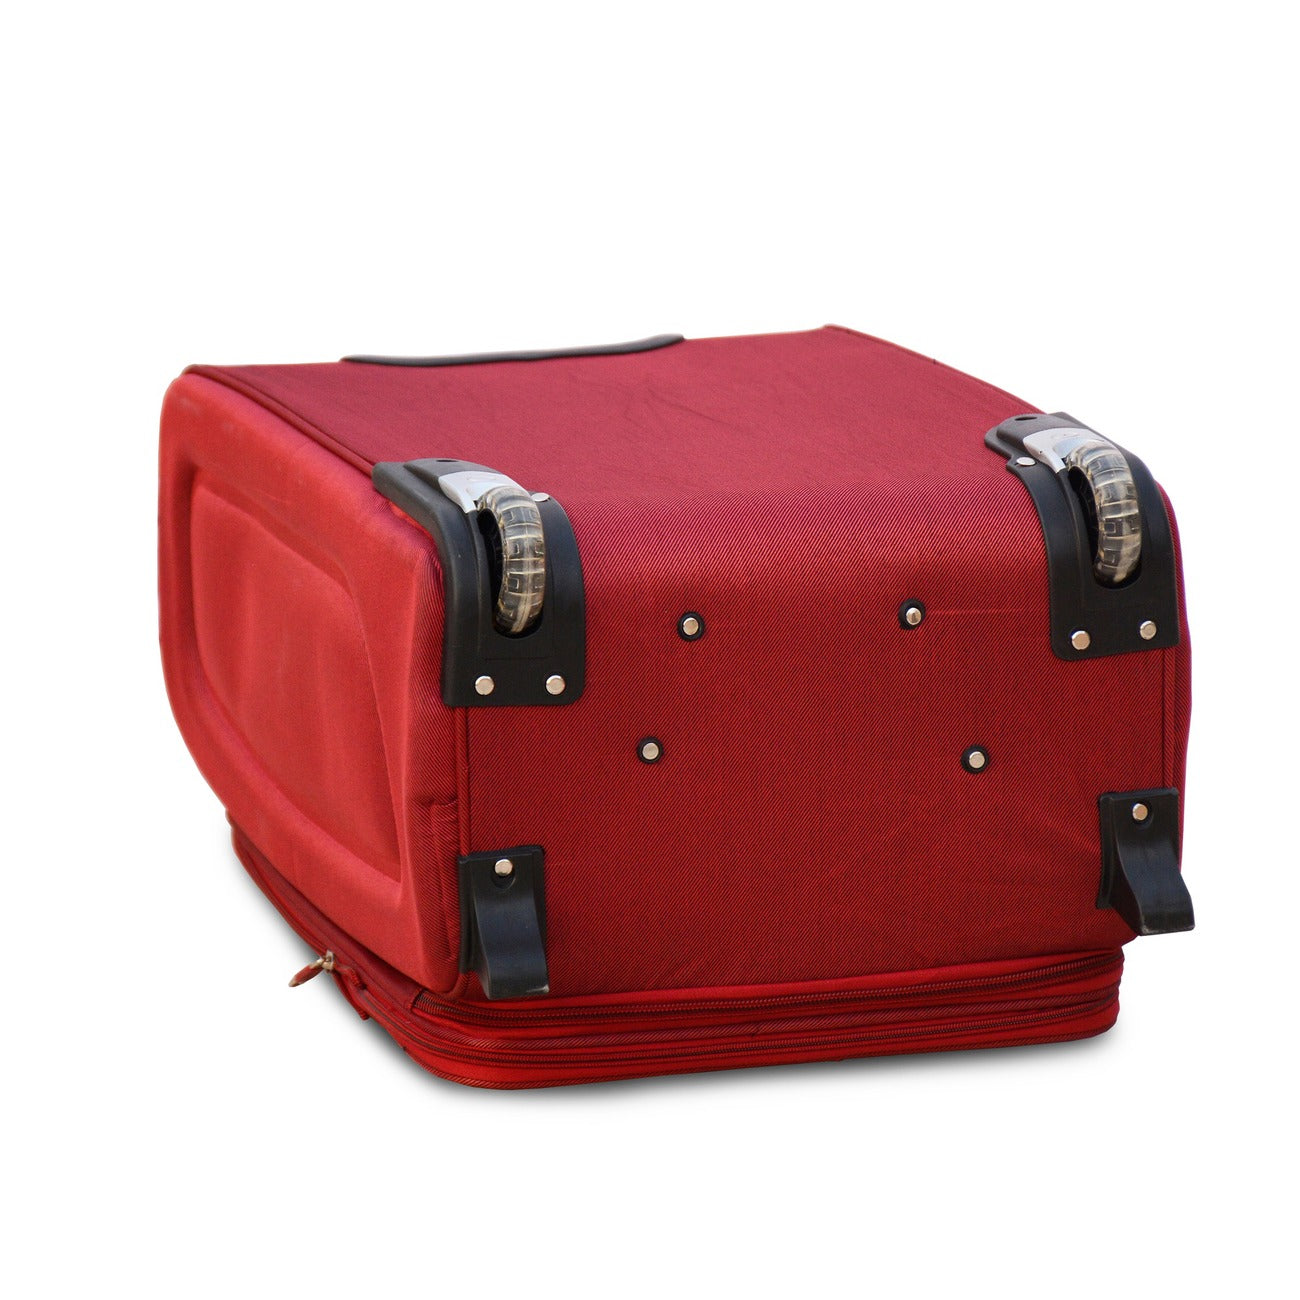 Red SJ JIAN 2 Wheel Lightweight Soft Material Luggage Bag Zaappy